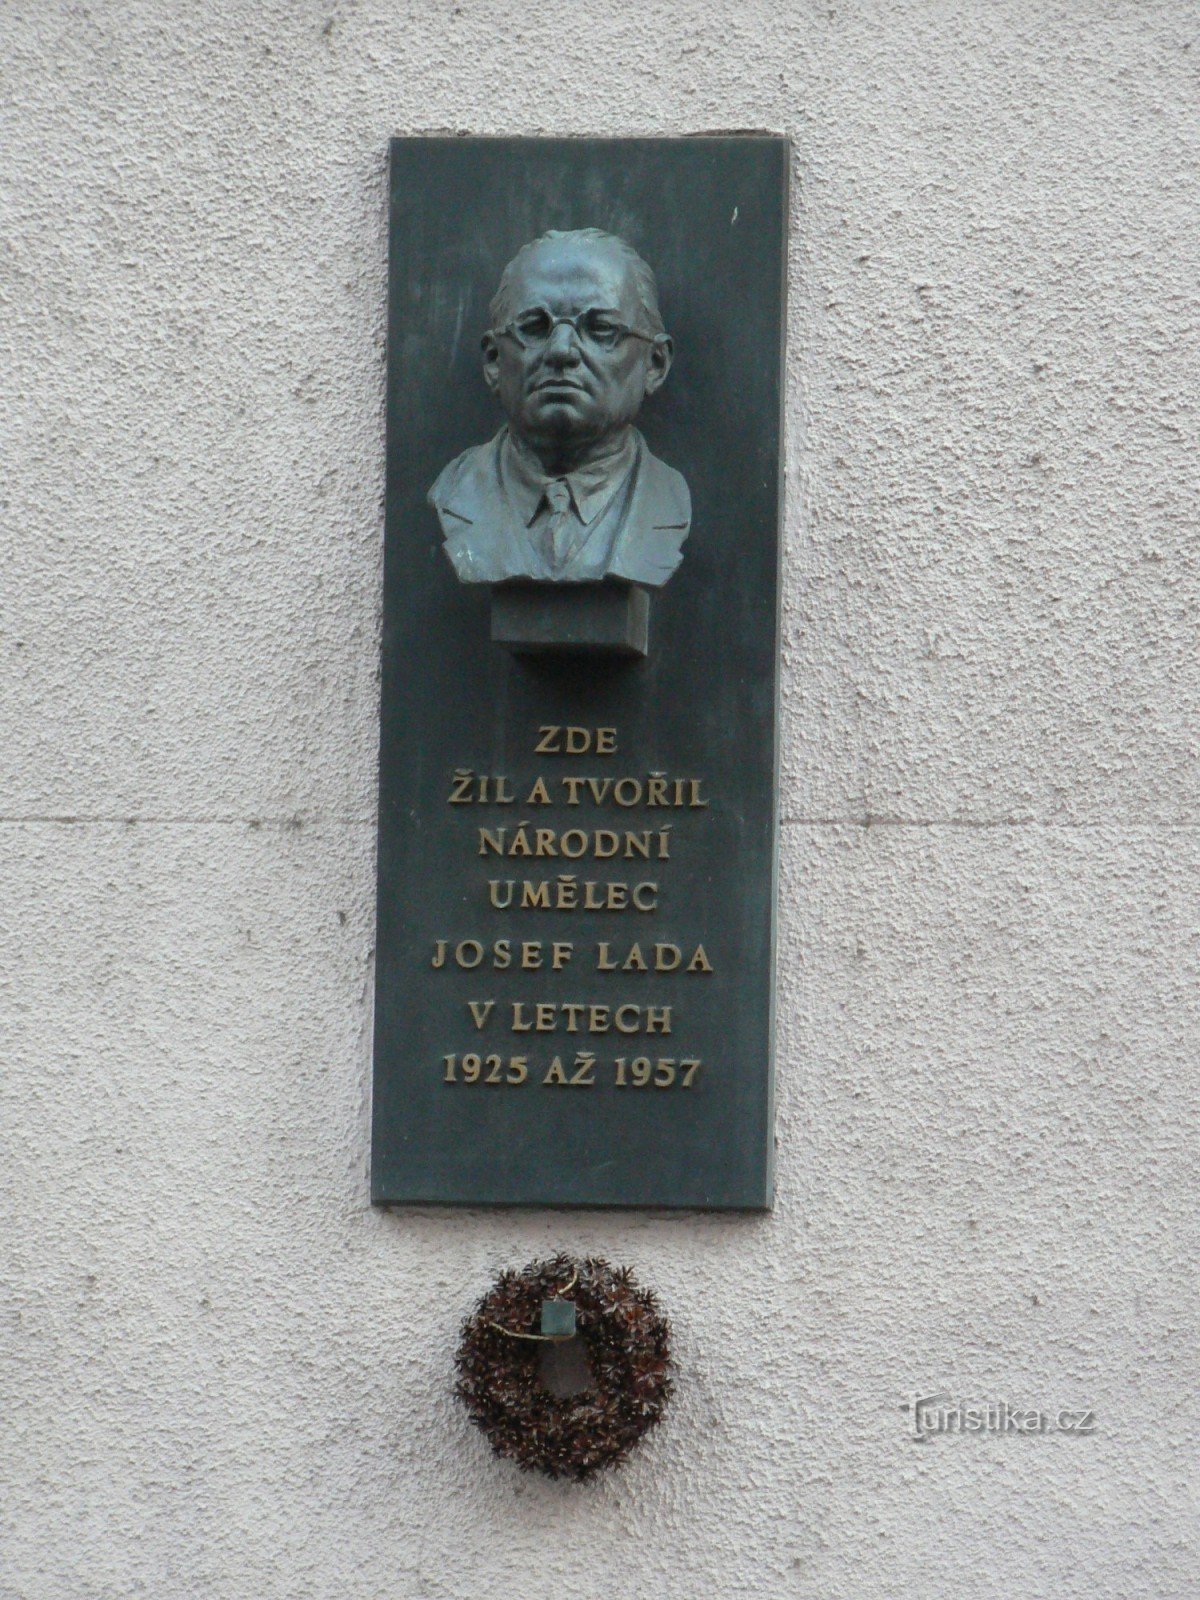 Placa comemorativa de Josef Lada